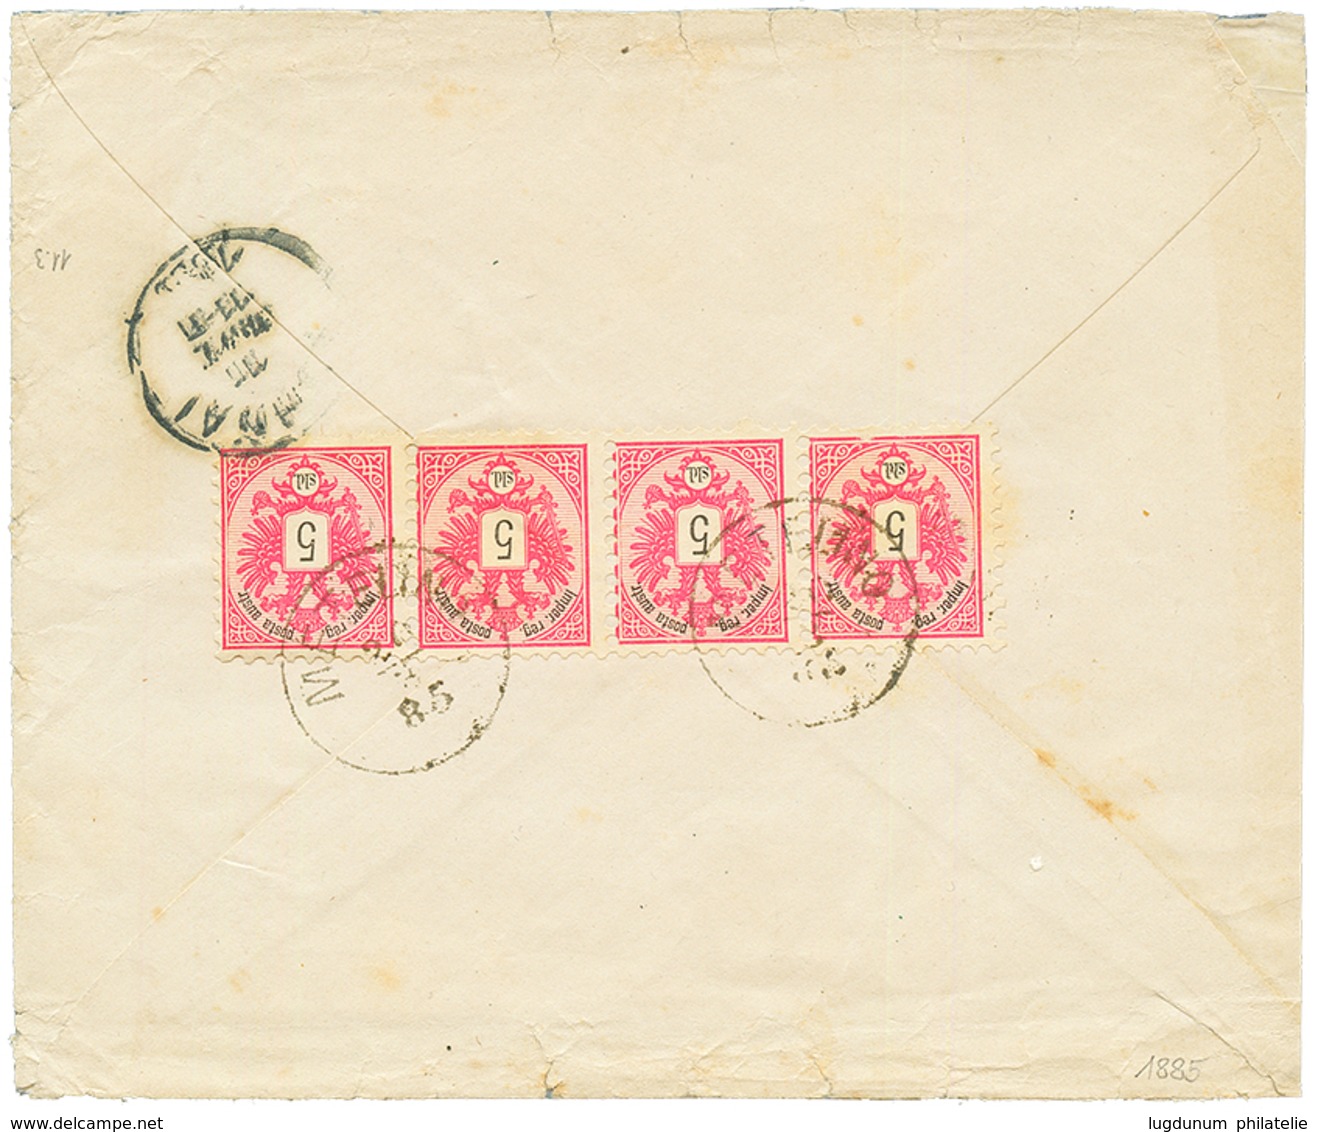 METELINE" : 1885 5 Soldi Strip Of 4 Canc. METELINO On Reveerse Of Envelope To ATHENES (GRECE). Scarce. Vf. - Oriente Austriaco